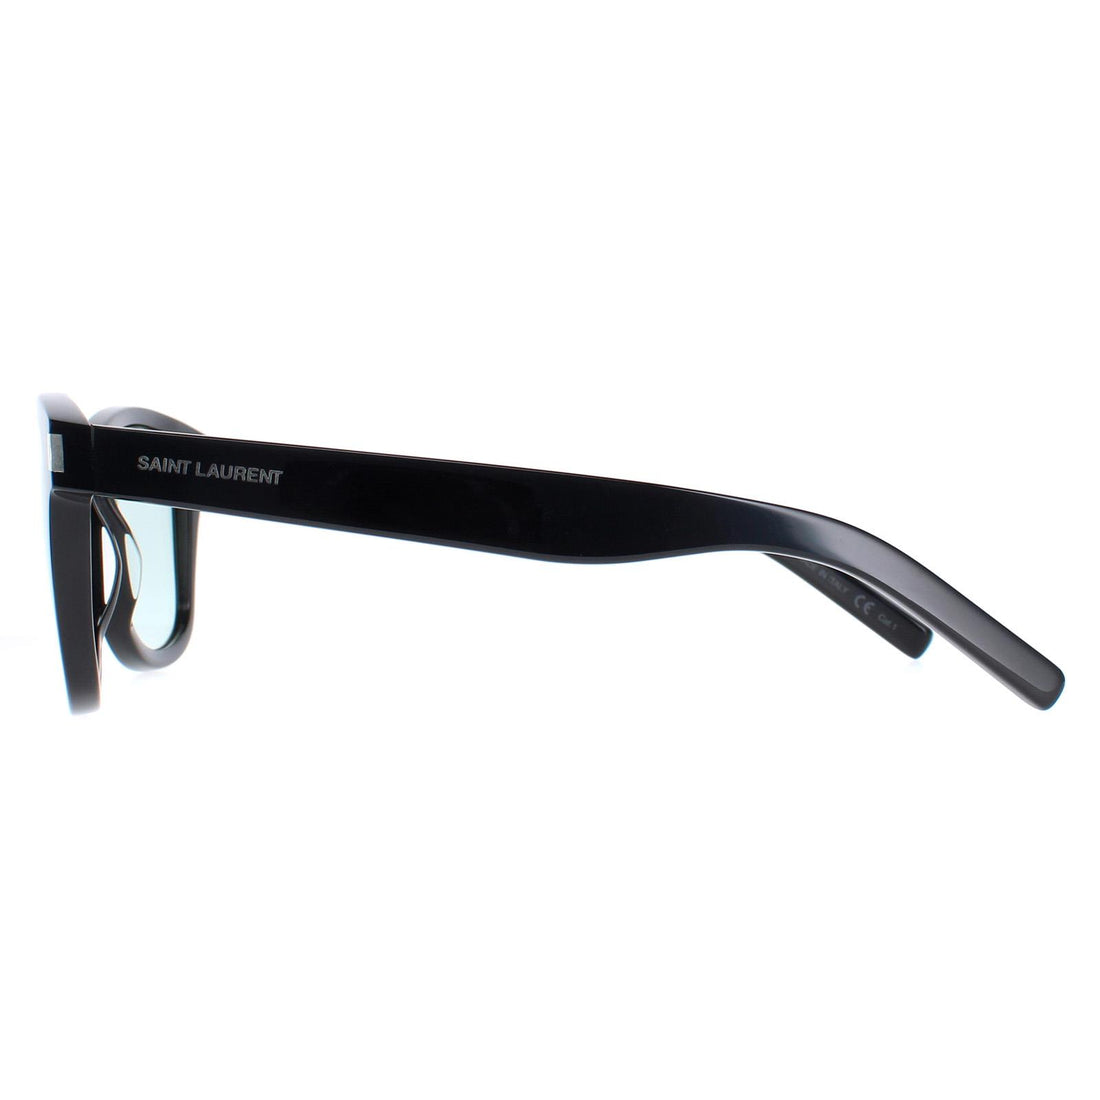 Saint Laurent Sunglasses CLASSIS SL 51 062 Shiny Black Solid Light Green